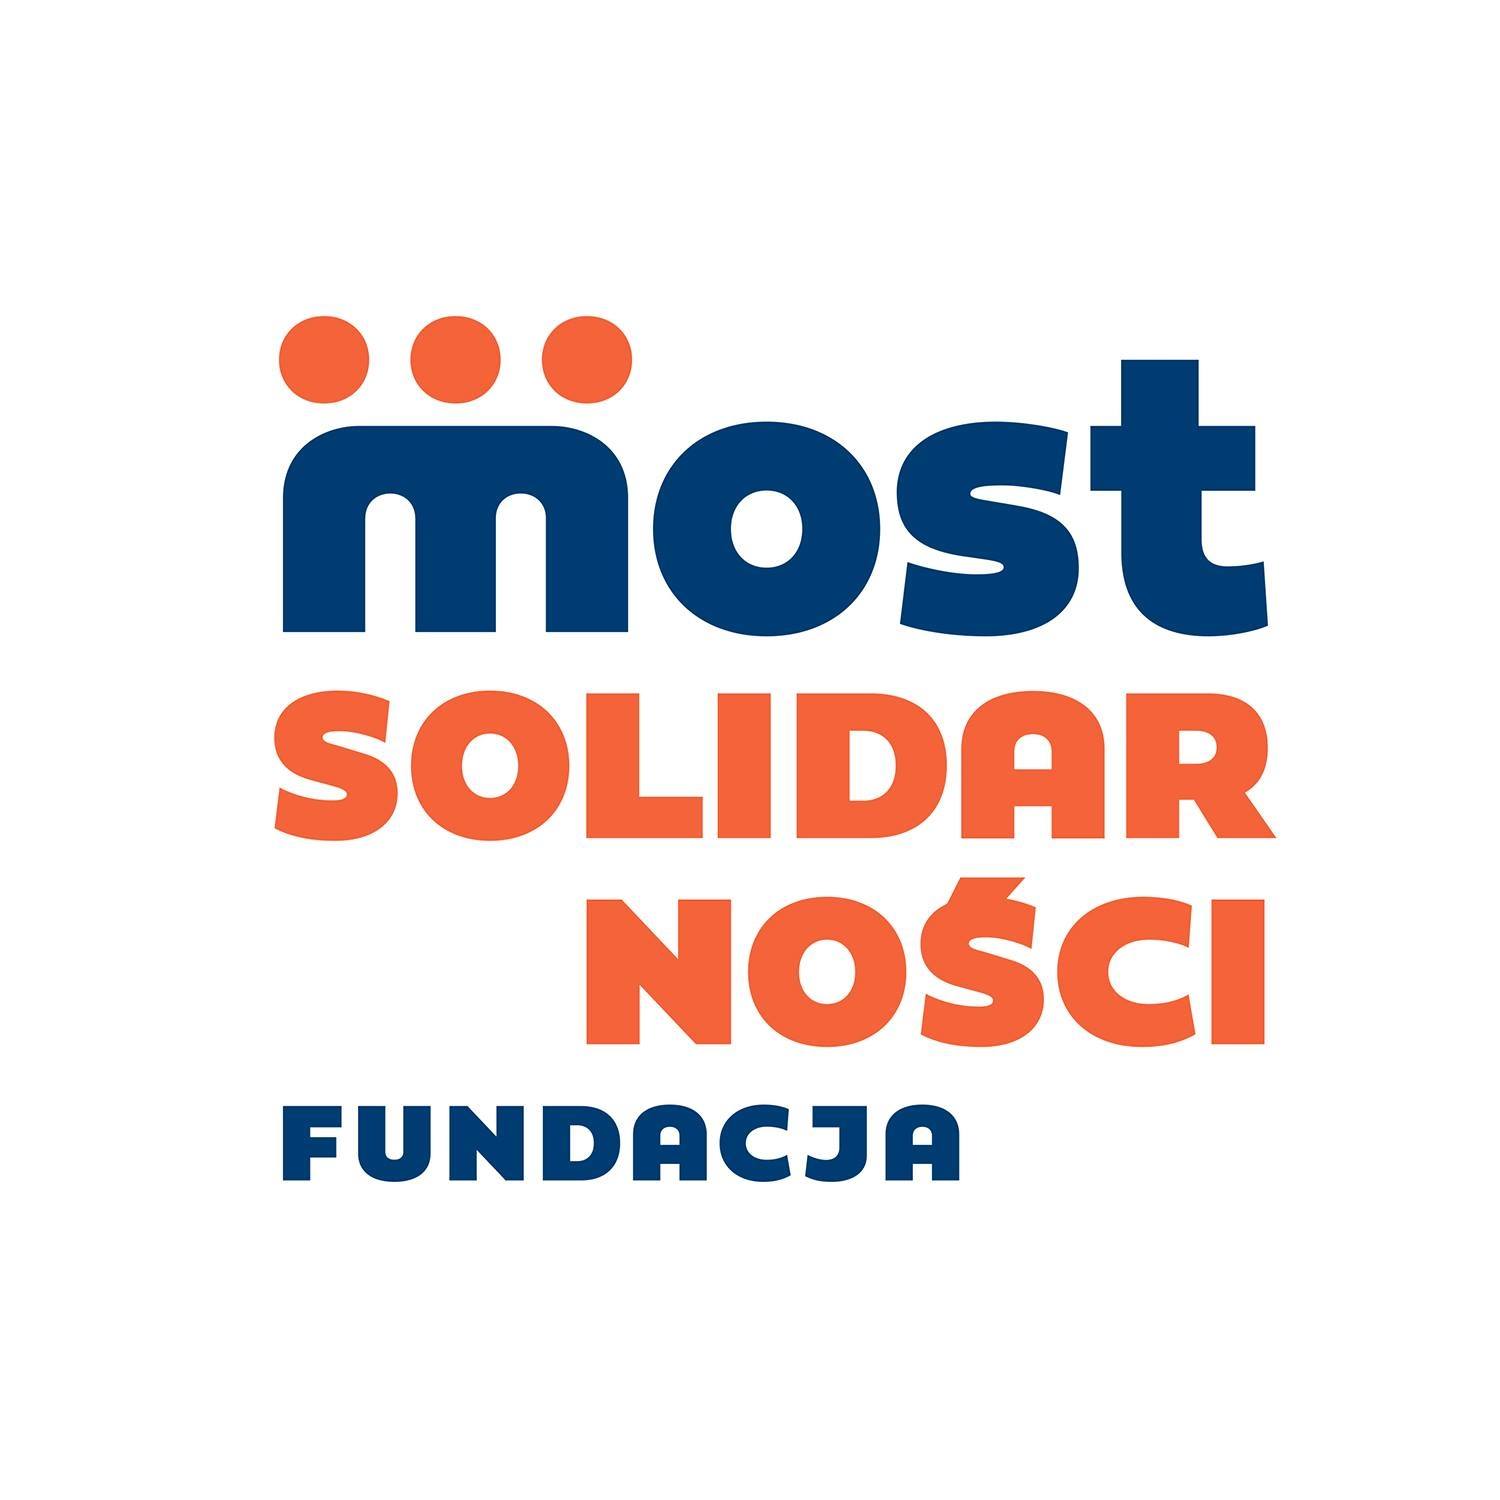 Fundacja Most Solidarności